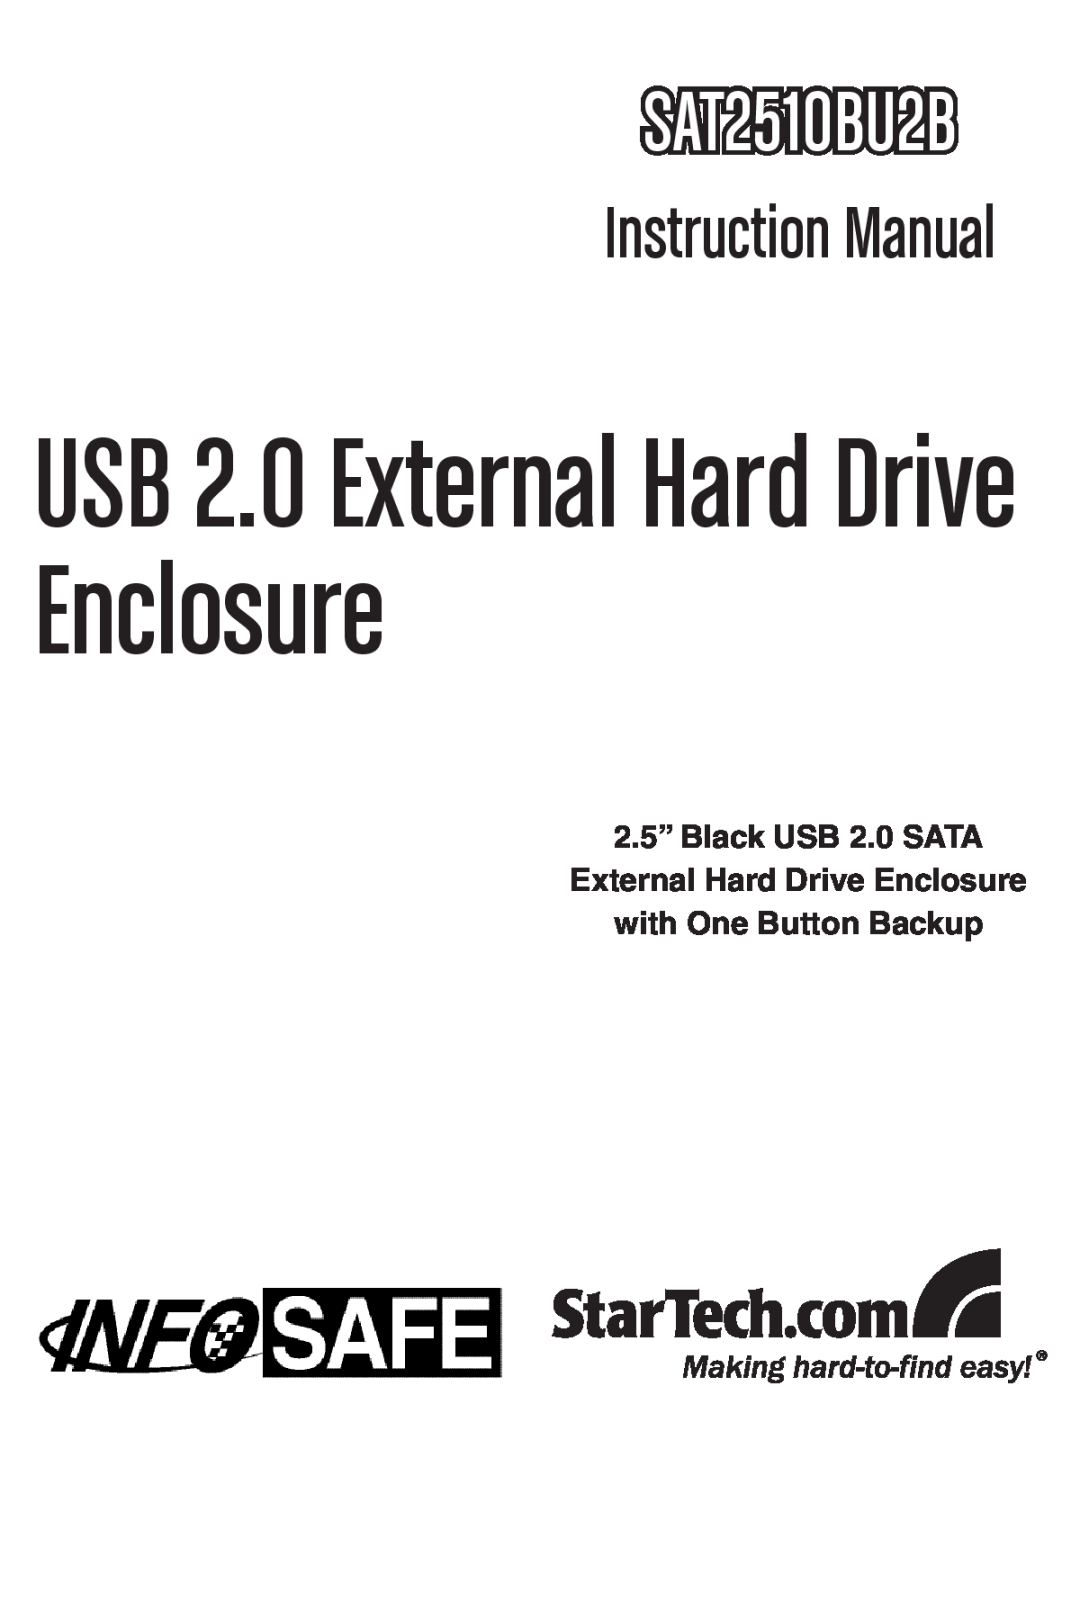 StarTech.com SAT2510BU2B instruction manual 2.5” Black USB 2.0 SATA External Hard Drive Enclosure, with One Button Backup 